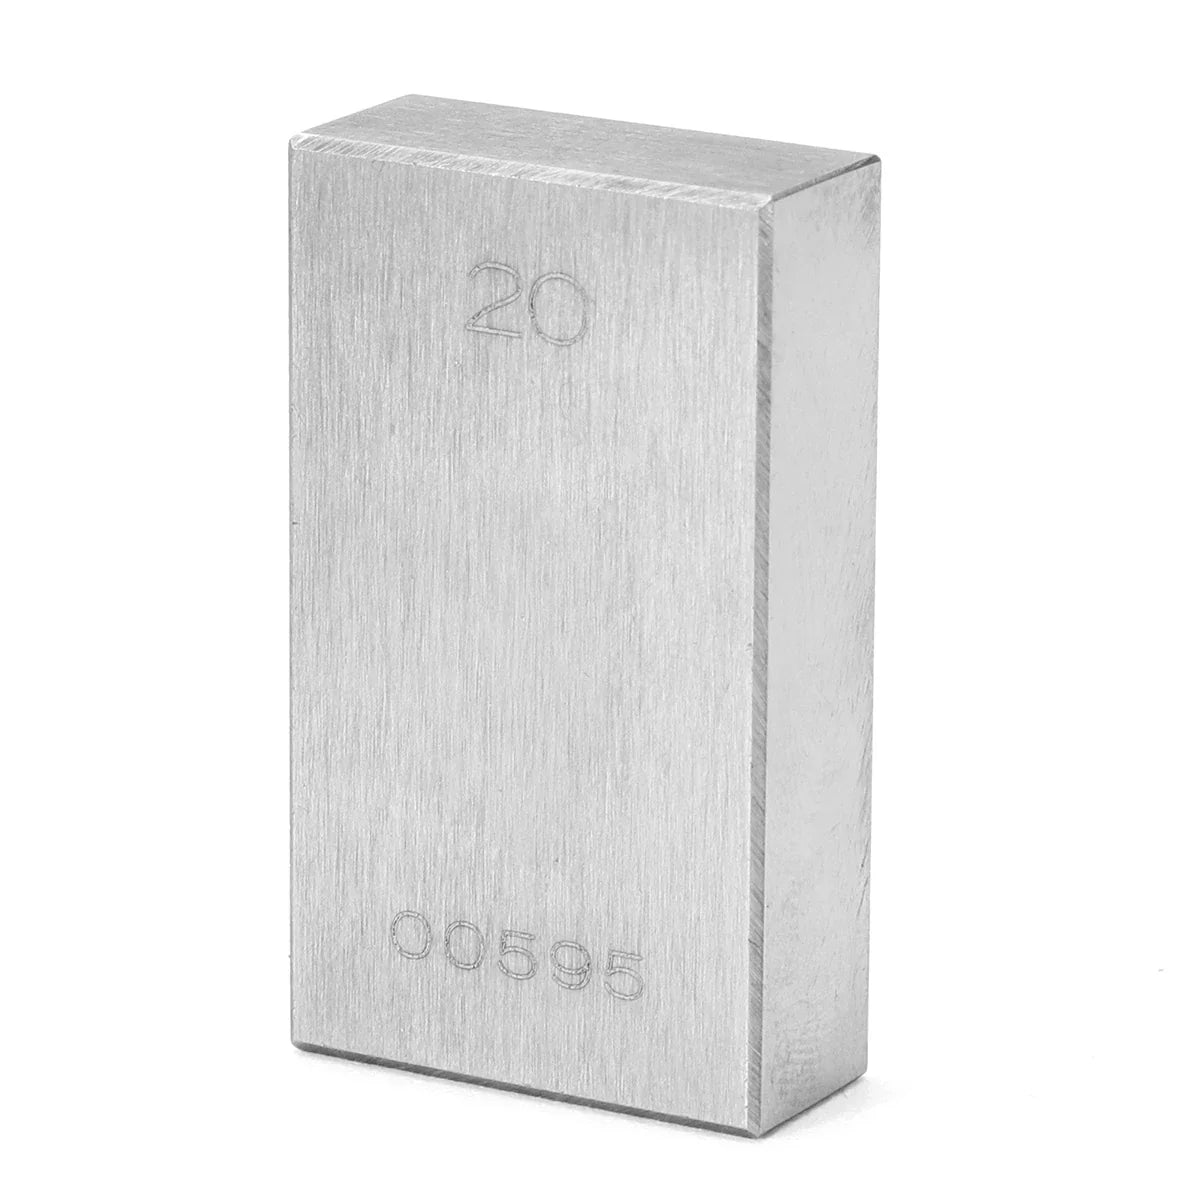 32pcs Steel Metric Gage Block Lathe Gauge Grade 0 Slip Jo Blocks 1.005-50mm Measure Tools